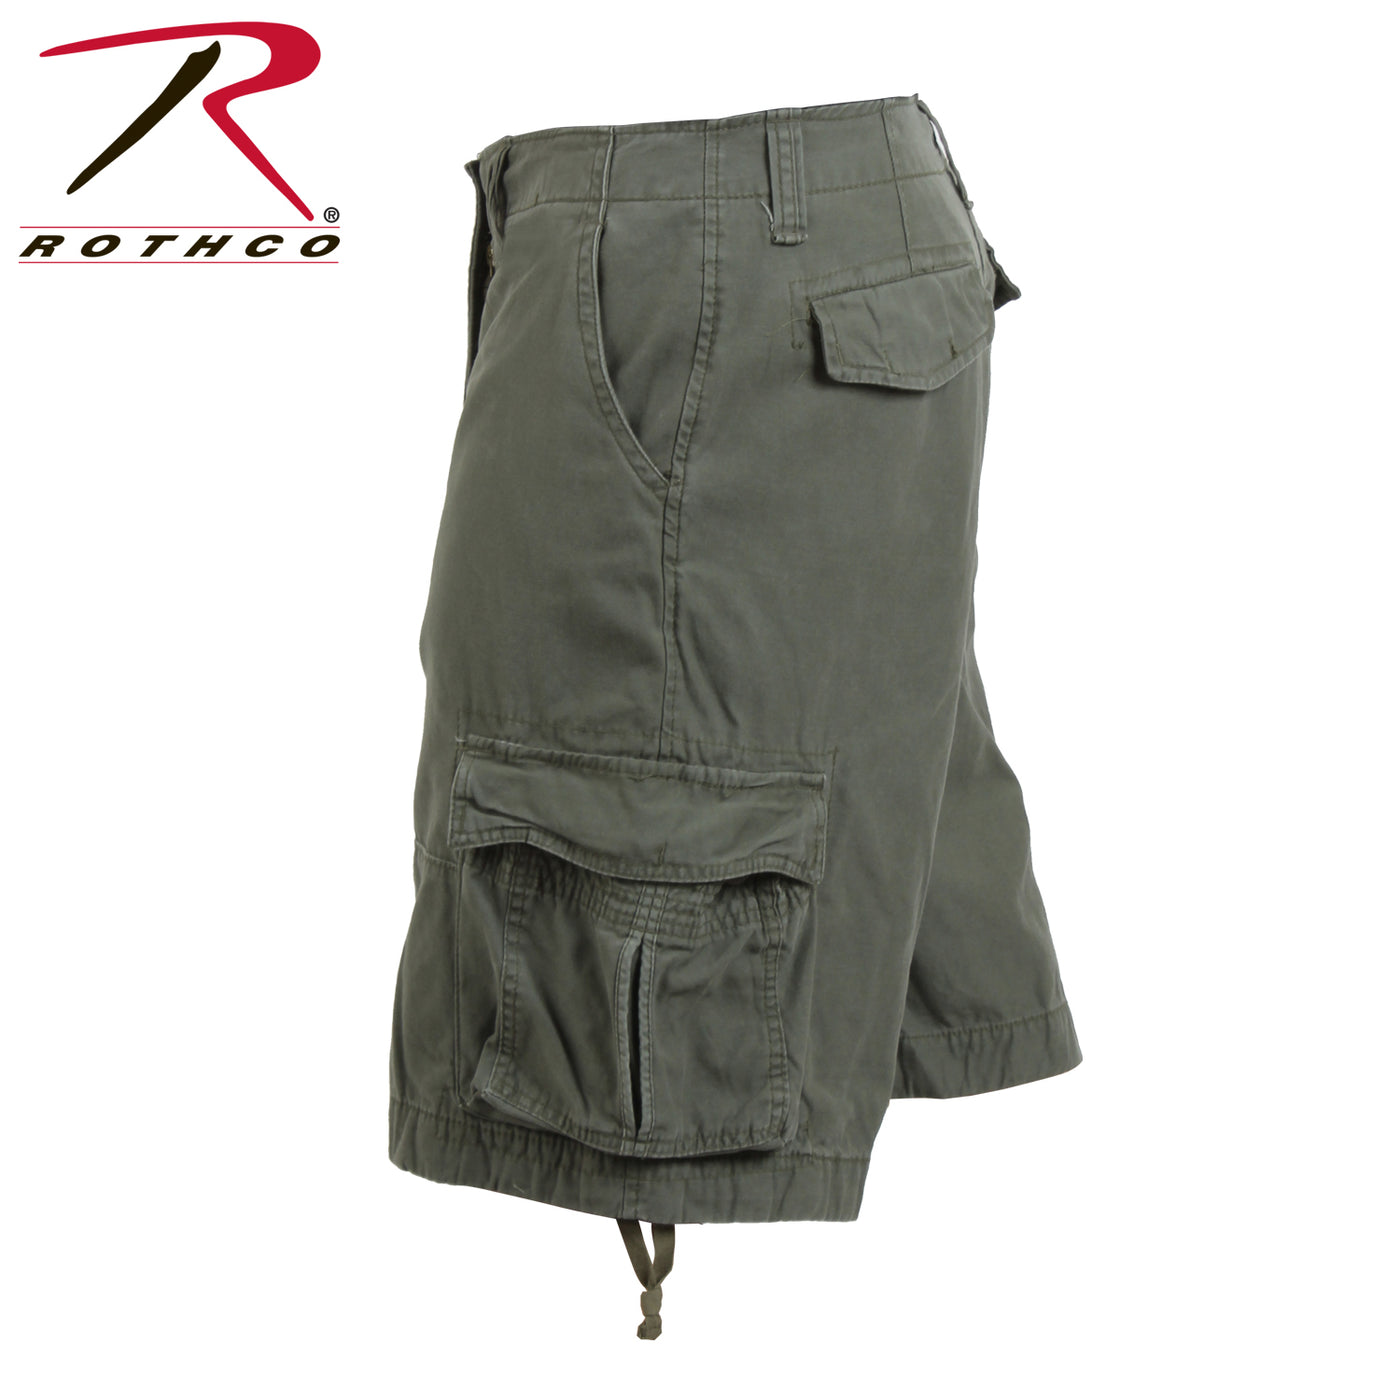 Rothco Vintage Utility Shorts